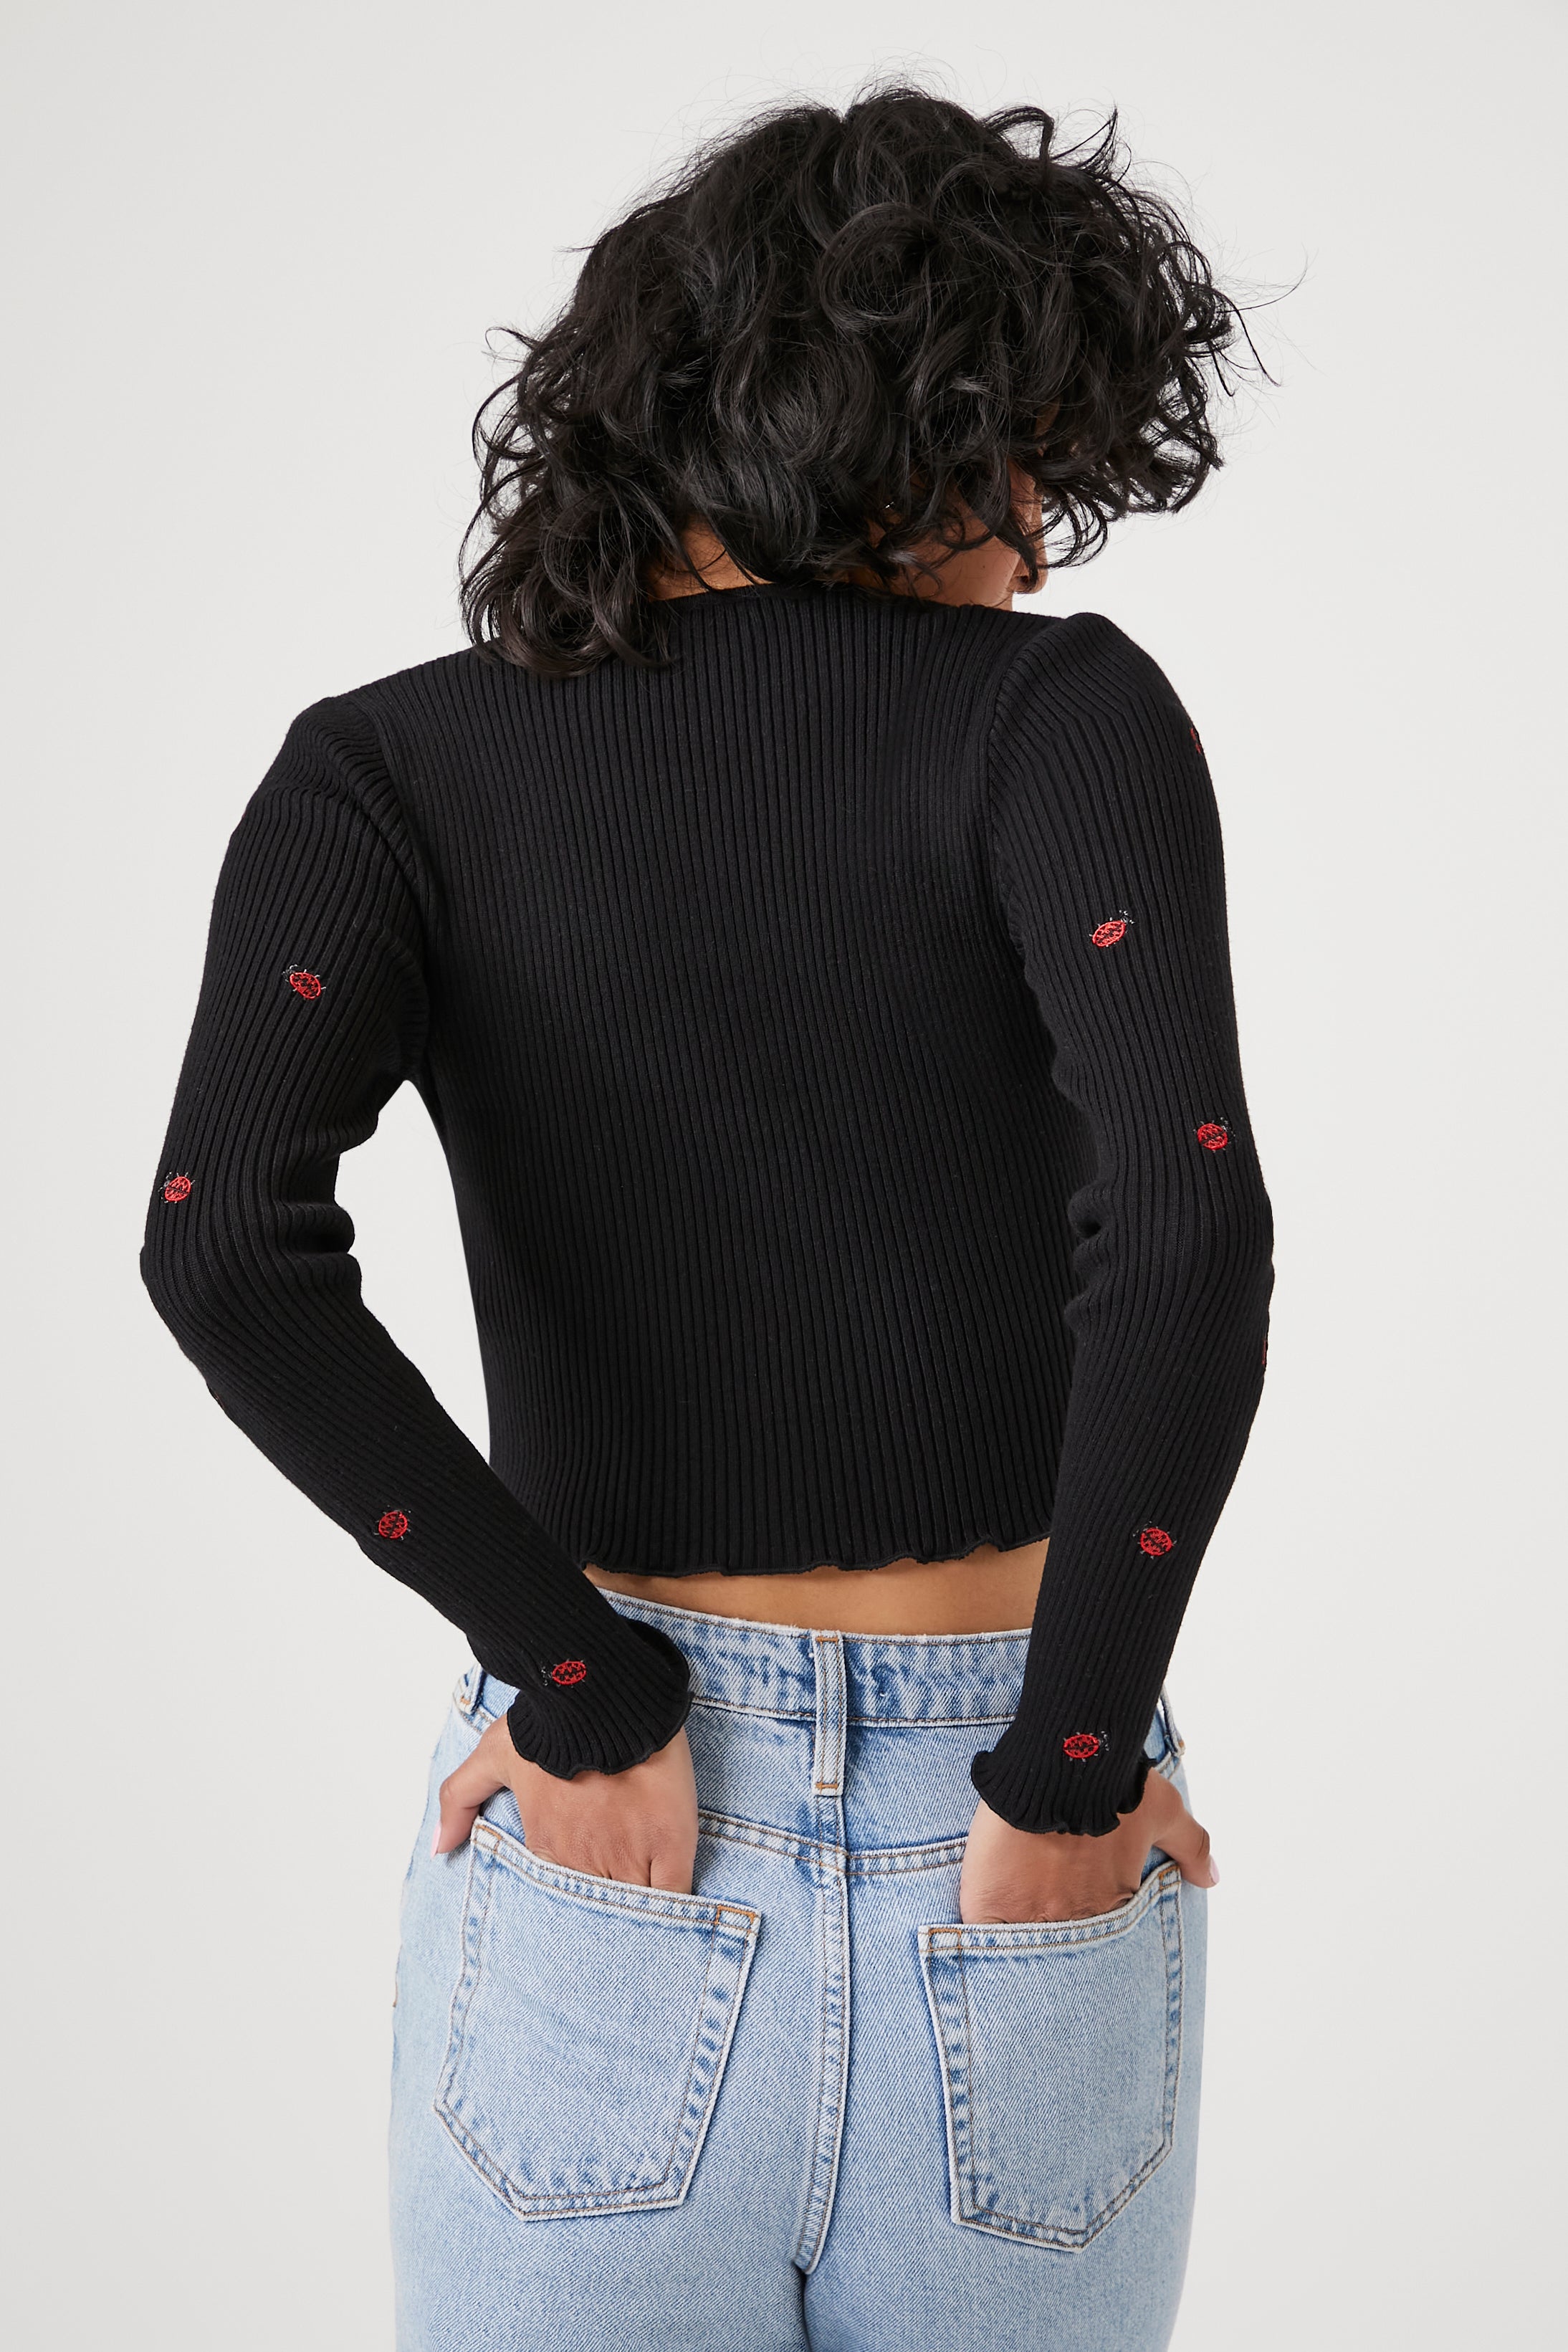 Black/Multi Ladybug Embroidered Cardigan Sweater 3